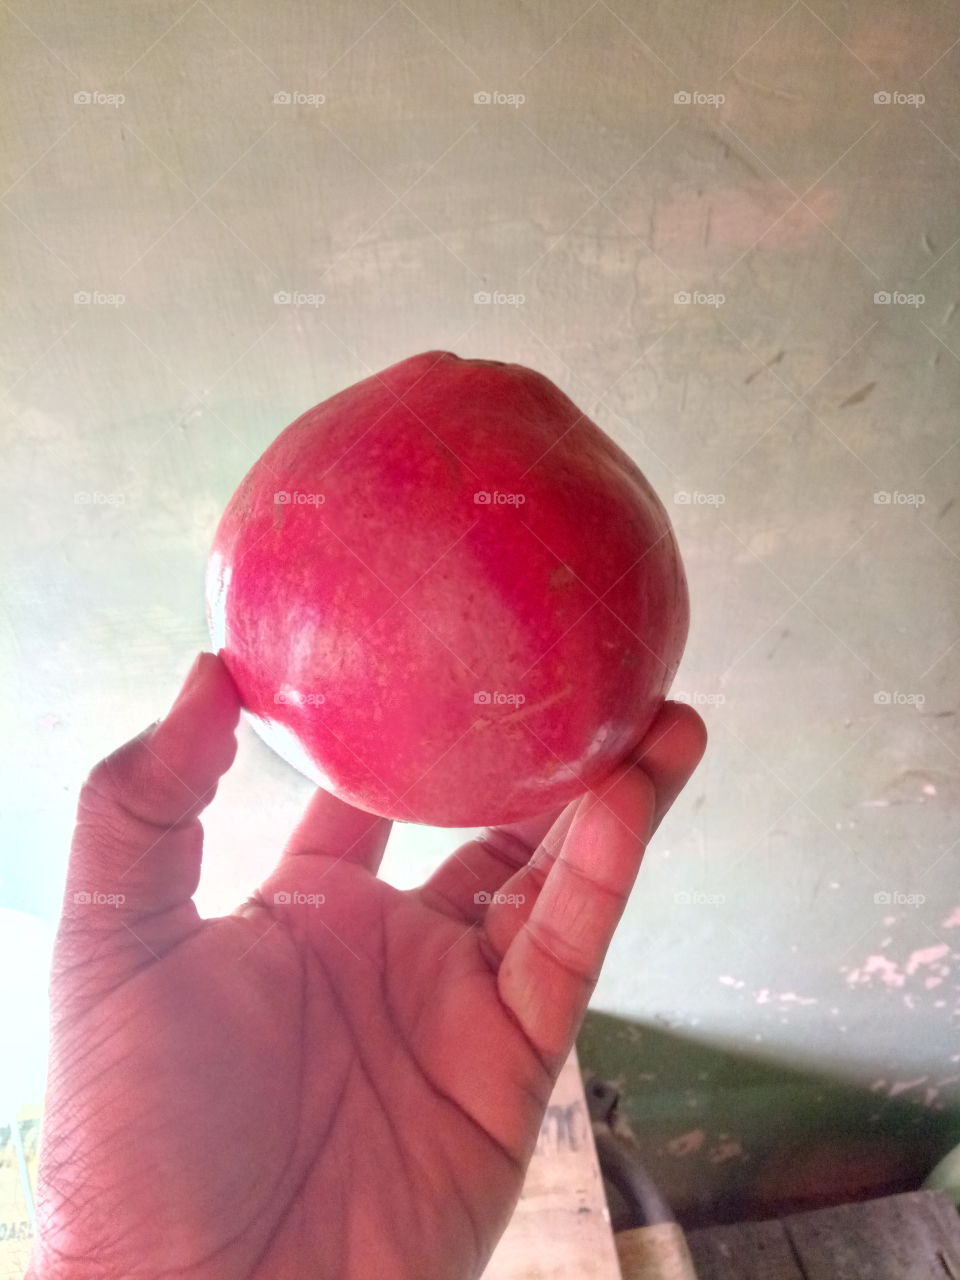 pomegranate huge size